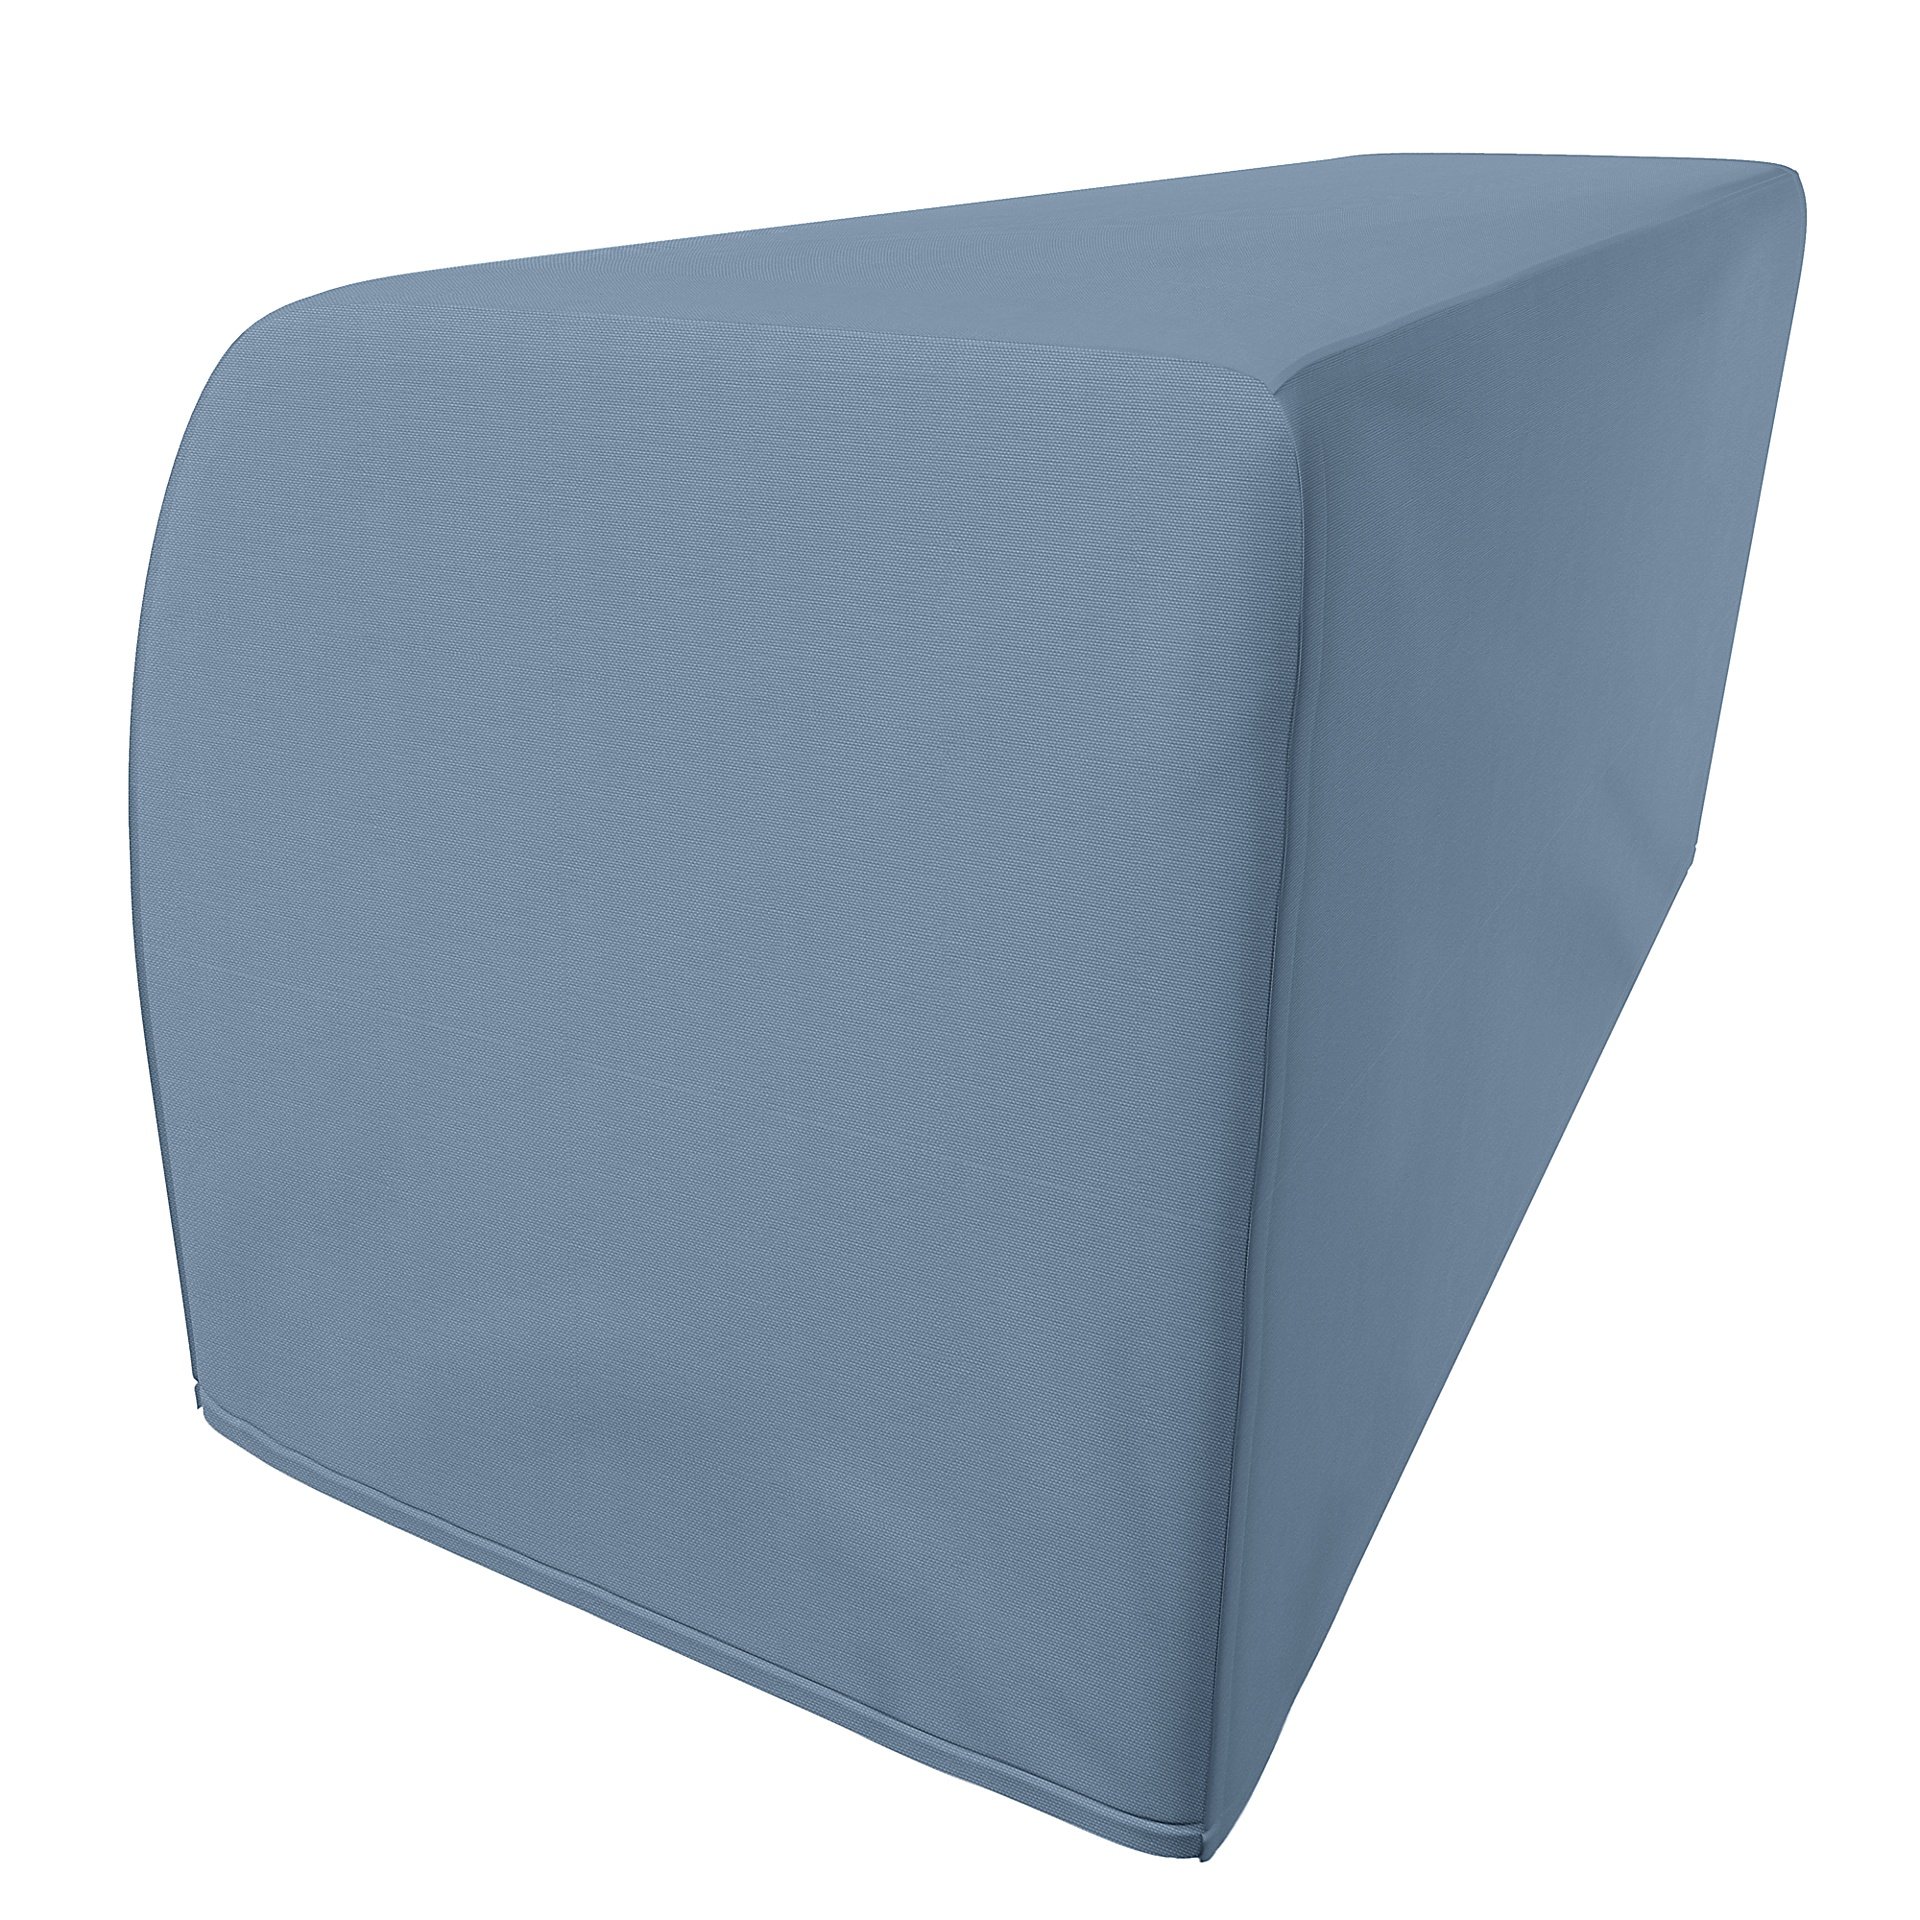 IKEA - Kramfors Armrest Protectors (One pair), Dusty Blue, Cotton - Bemz